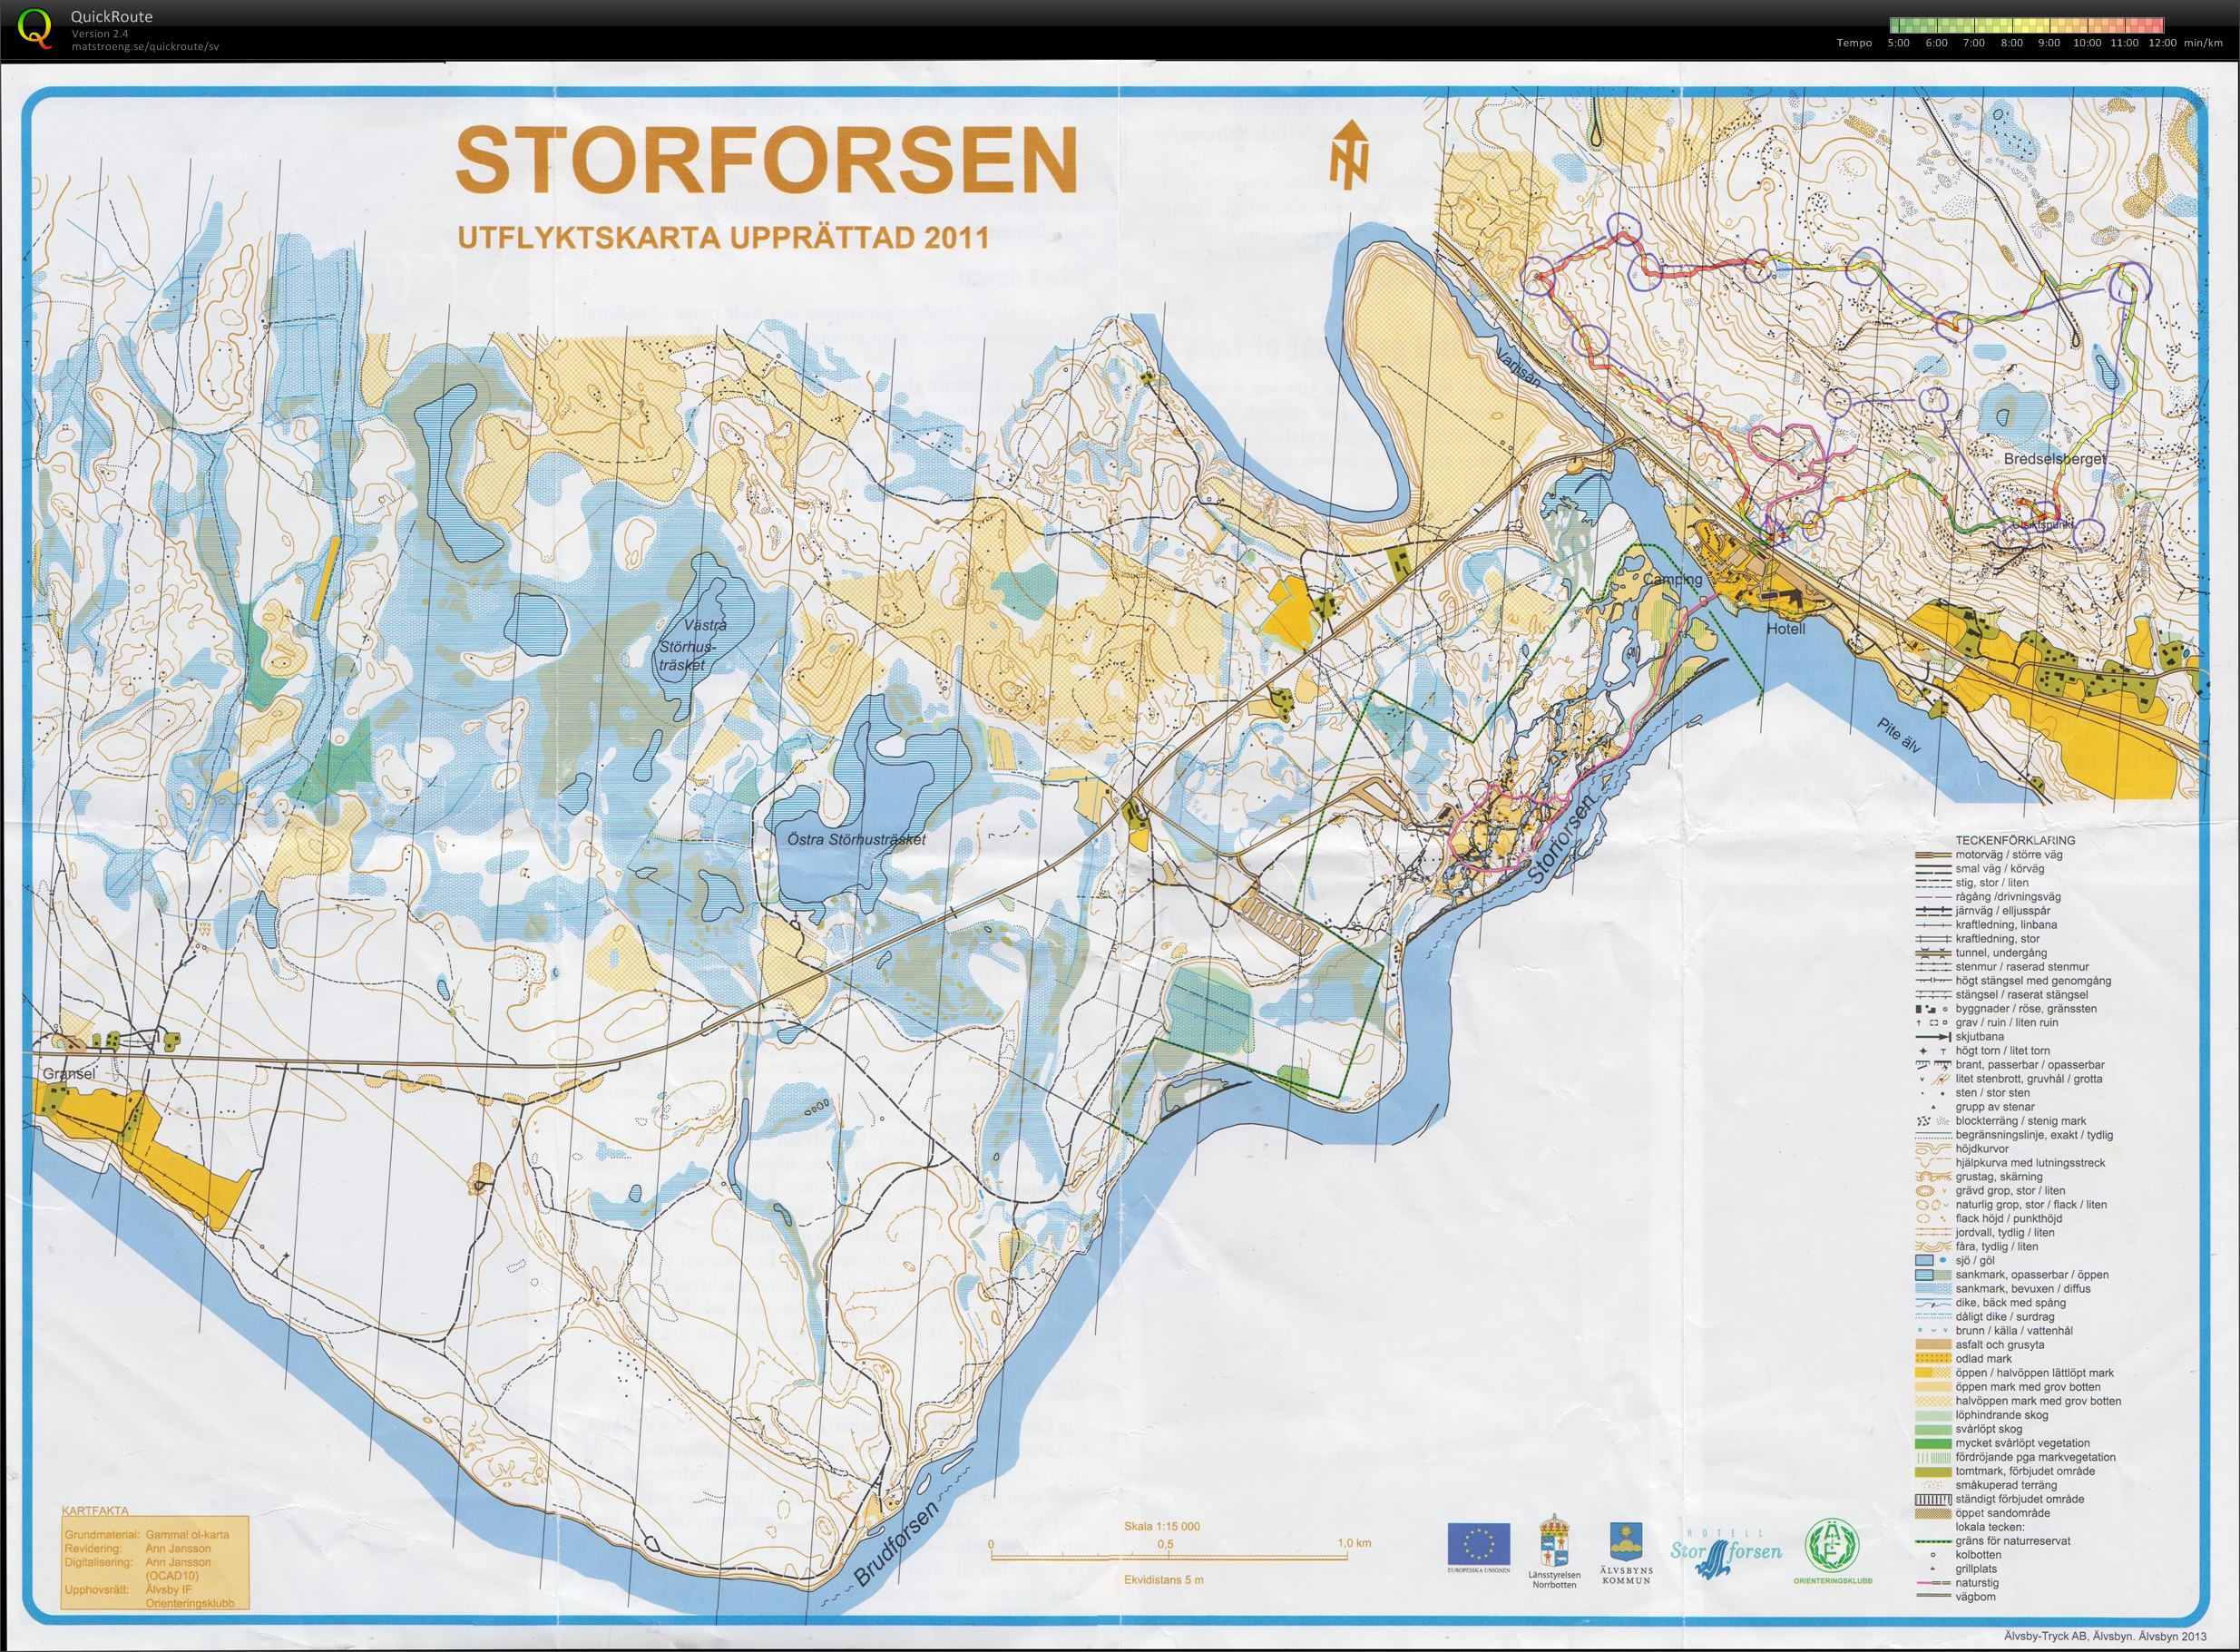 Storforsen (06.07.2015)